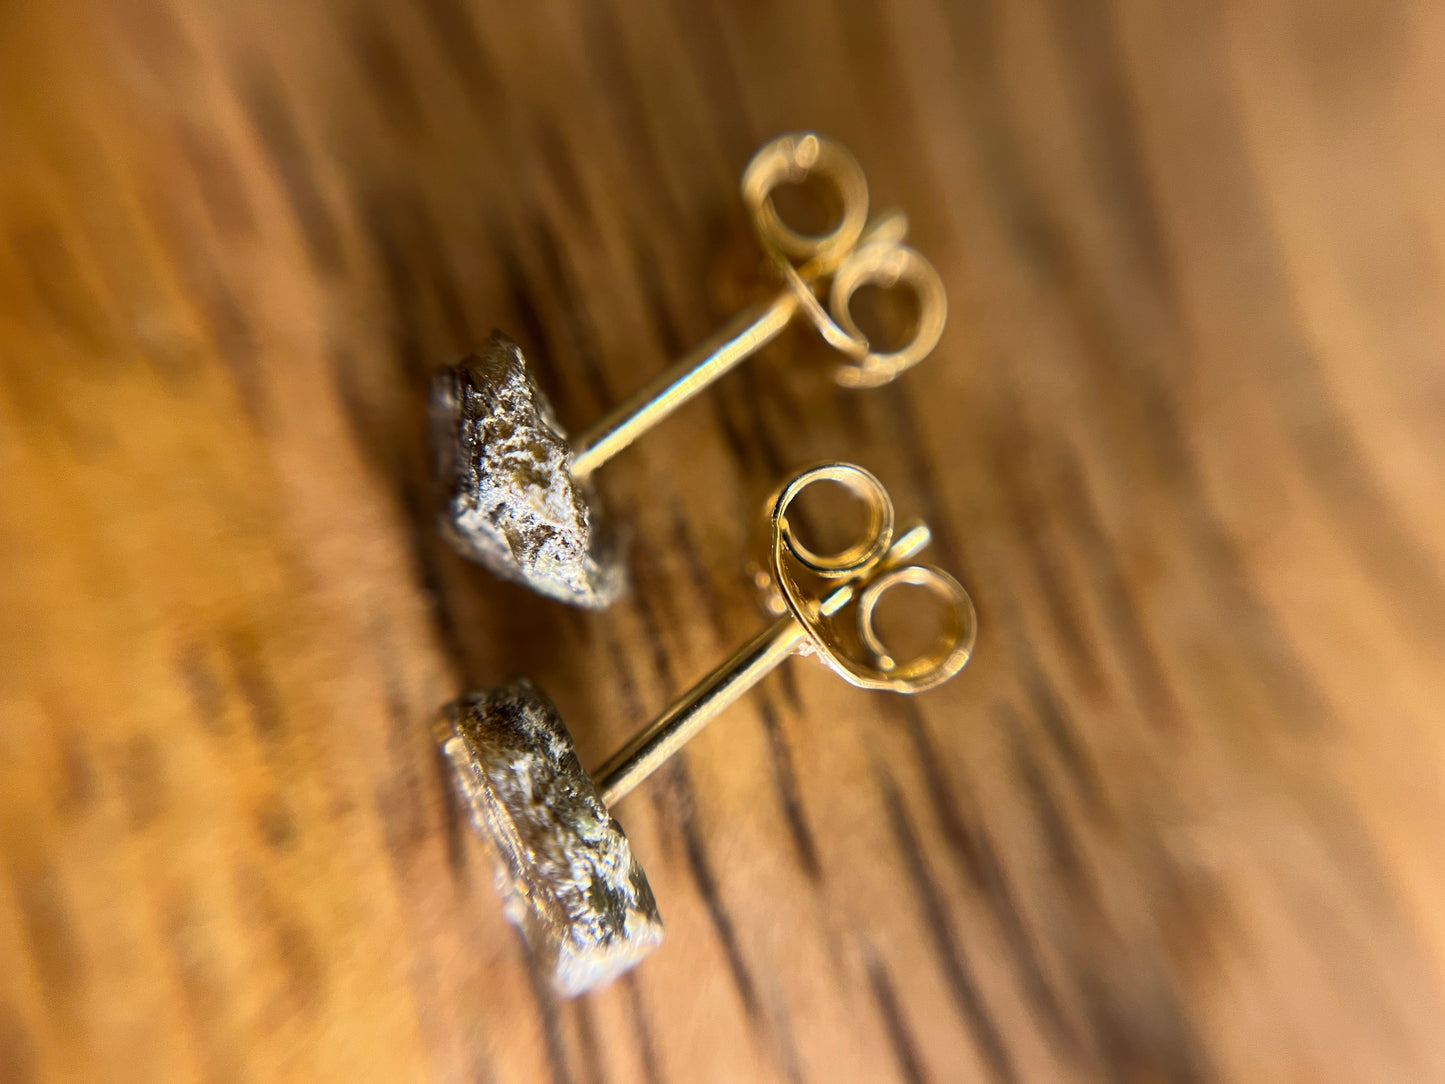 9ct or 18ct Gold Bronzite Stud Earrings, Natural Bronzite Earrings, Raw Crystal Earrings, Raw Bronzite Jewellery, Minimalist Earring Studs